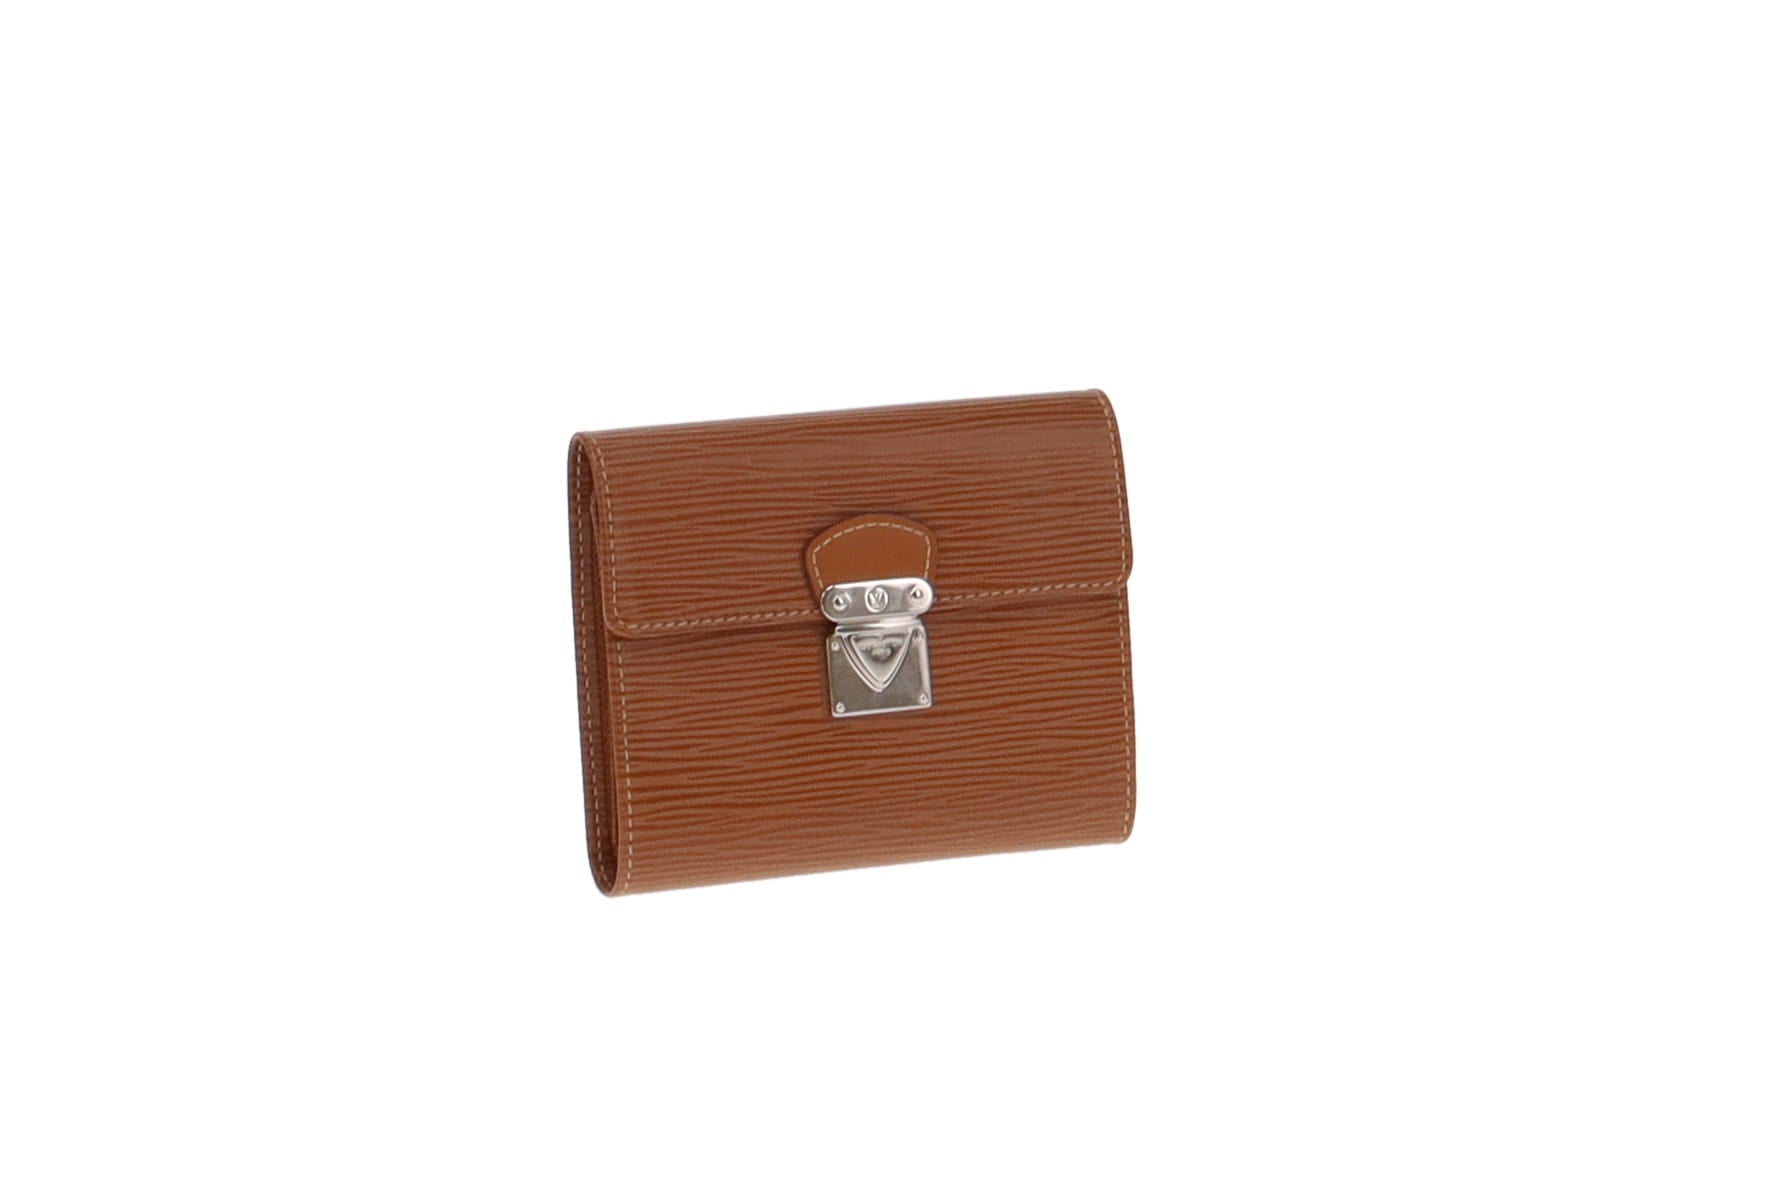 Louis Vuitton Ivory Epi Leather Koala Compact Wallet